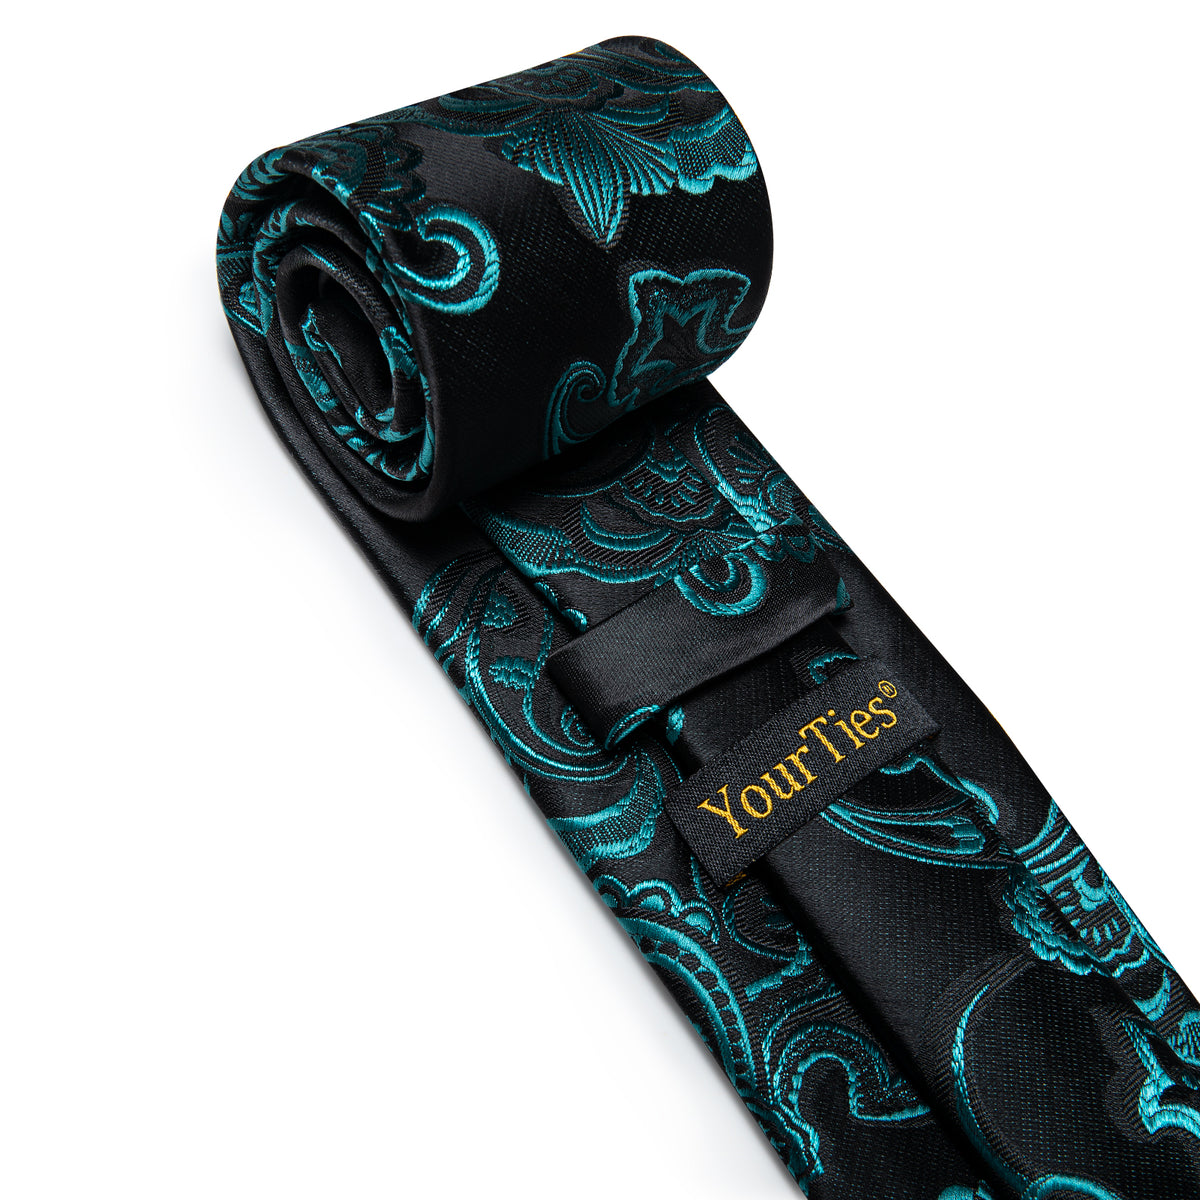 Blue Green Floral Men's Necktie Pocket Square Cufflinks Set